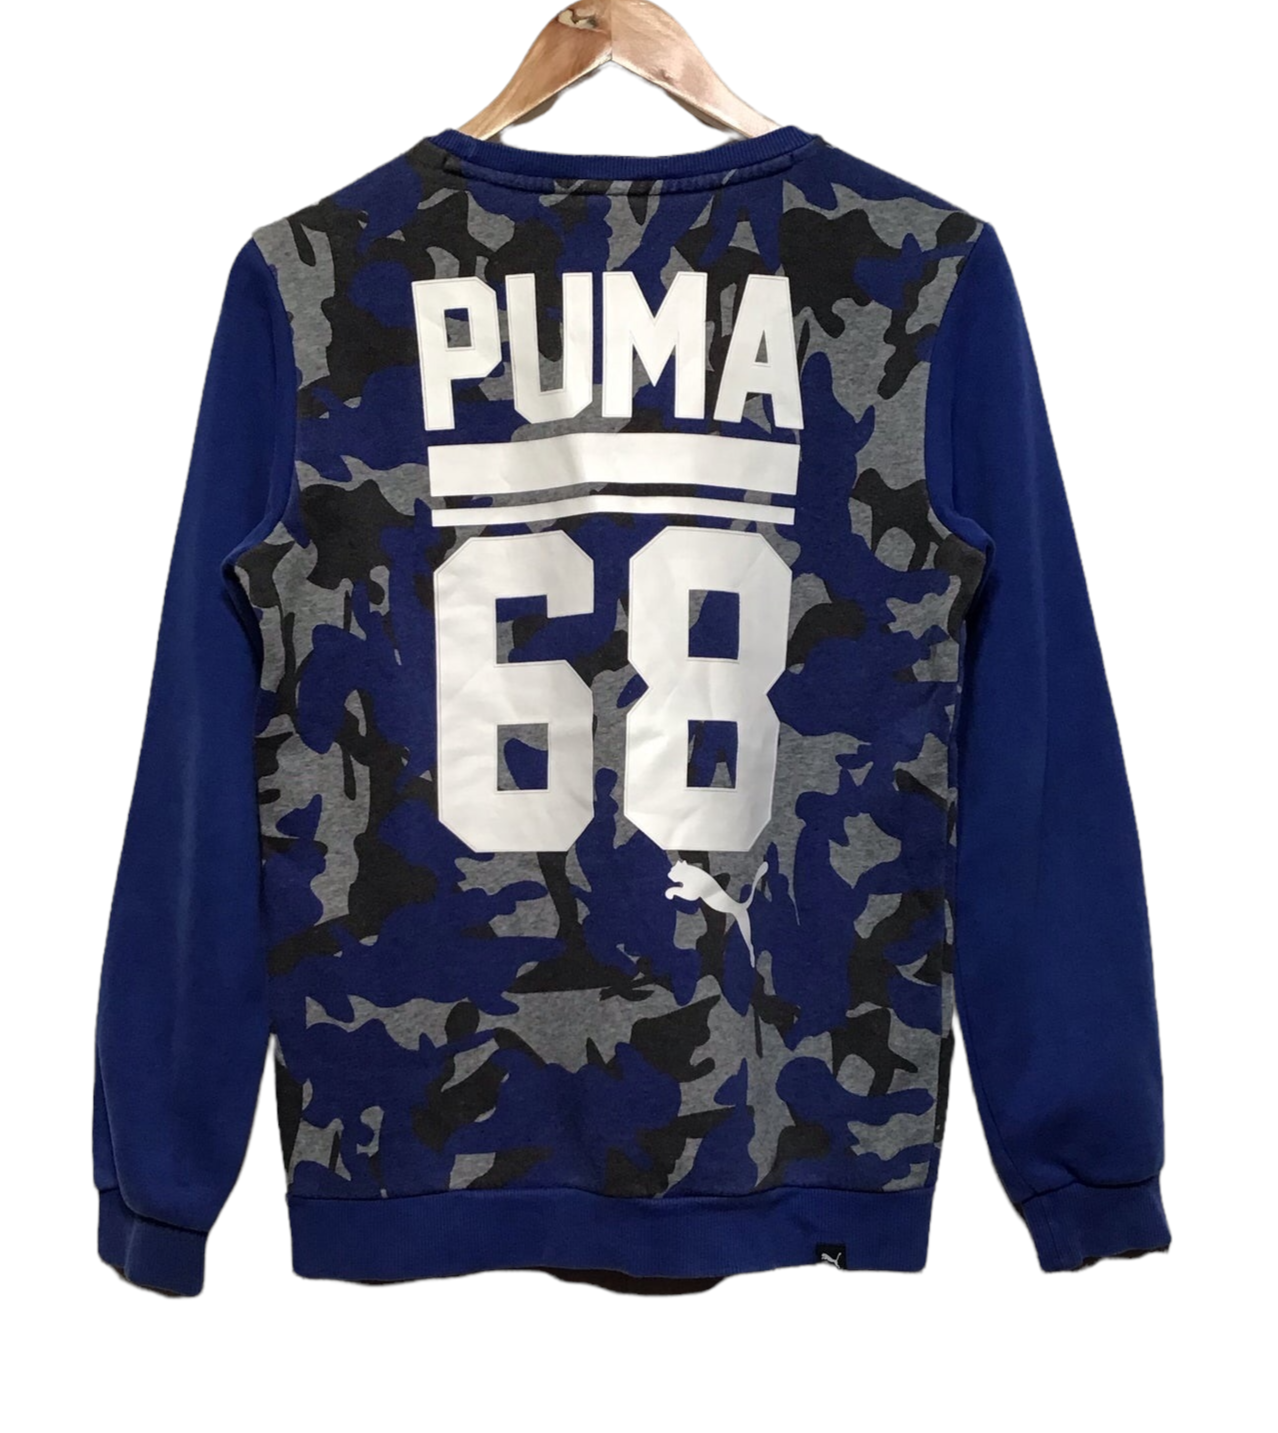 Puma Sweatshirt (Size S)